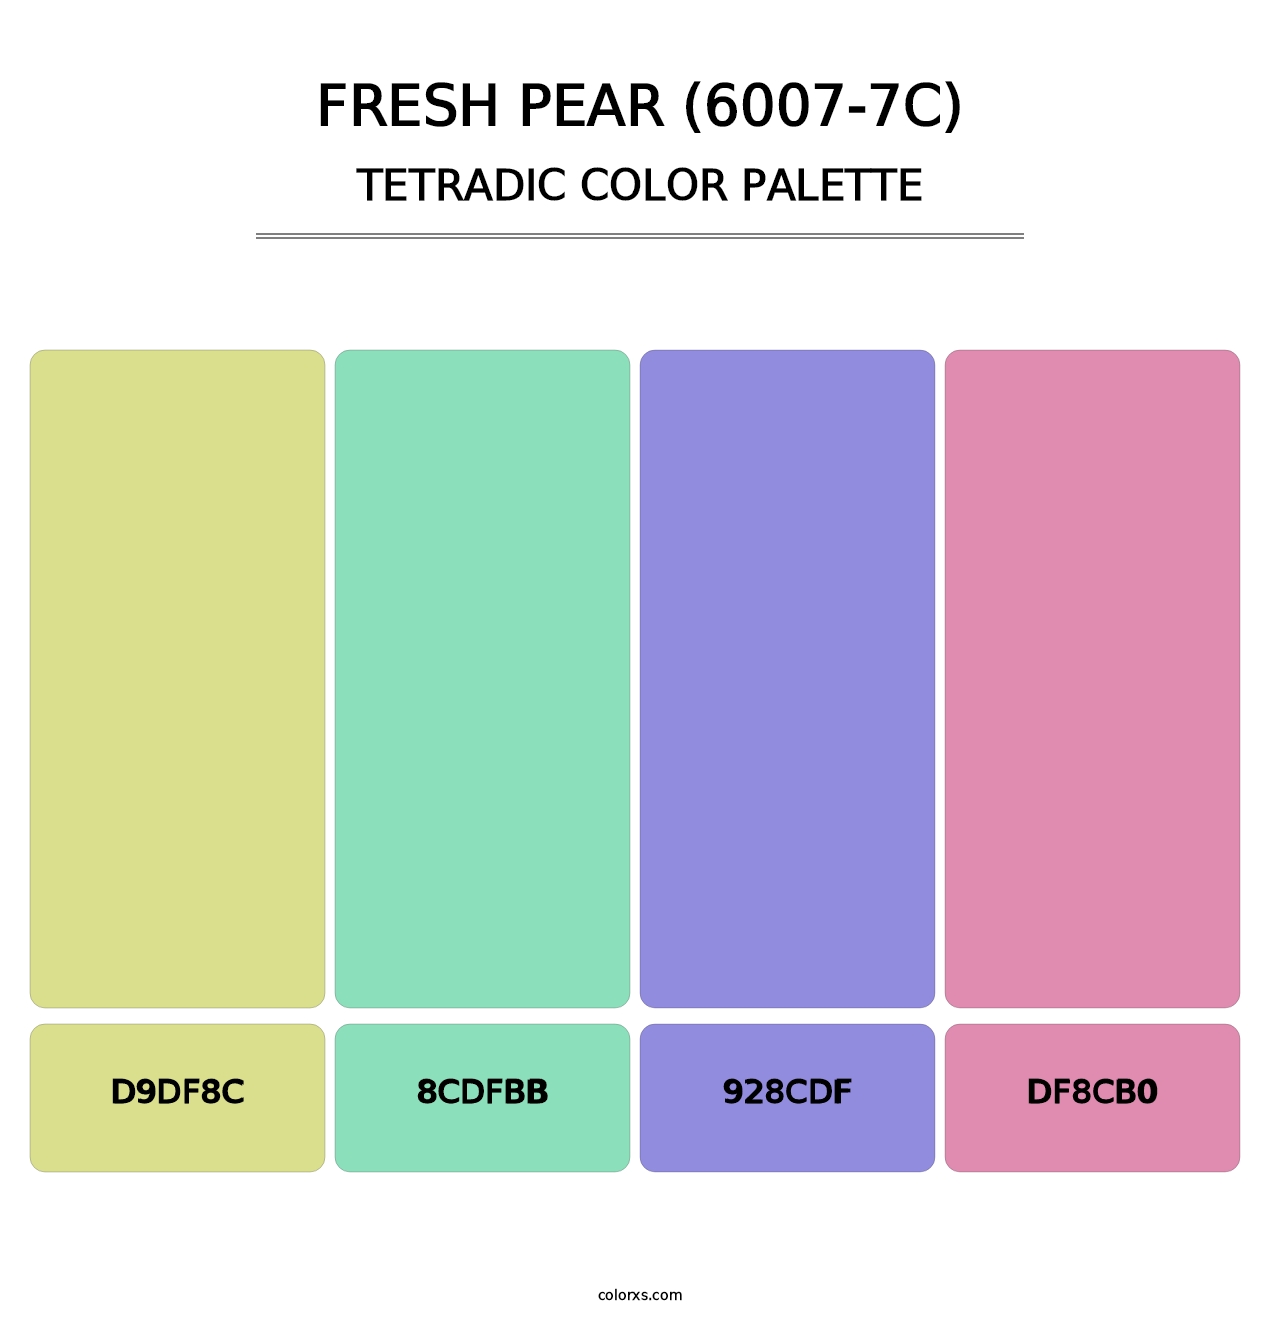 Fresh Pear (6007-7C) - Tetradic Color Palette